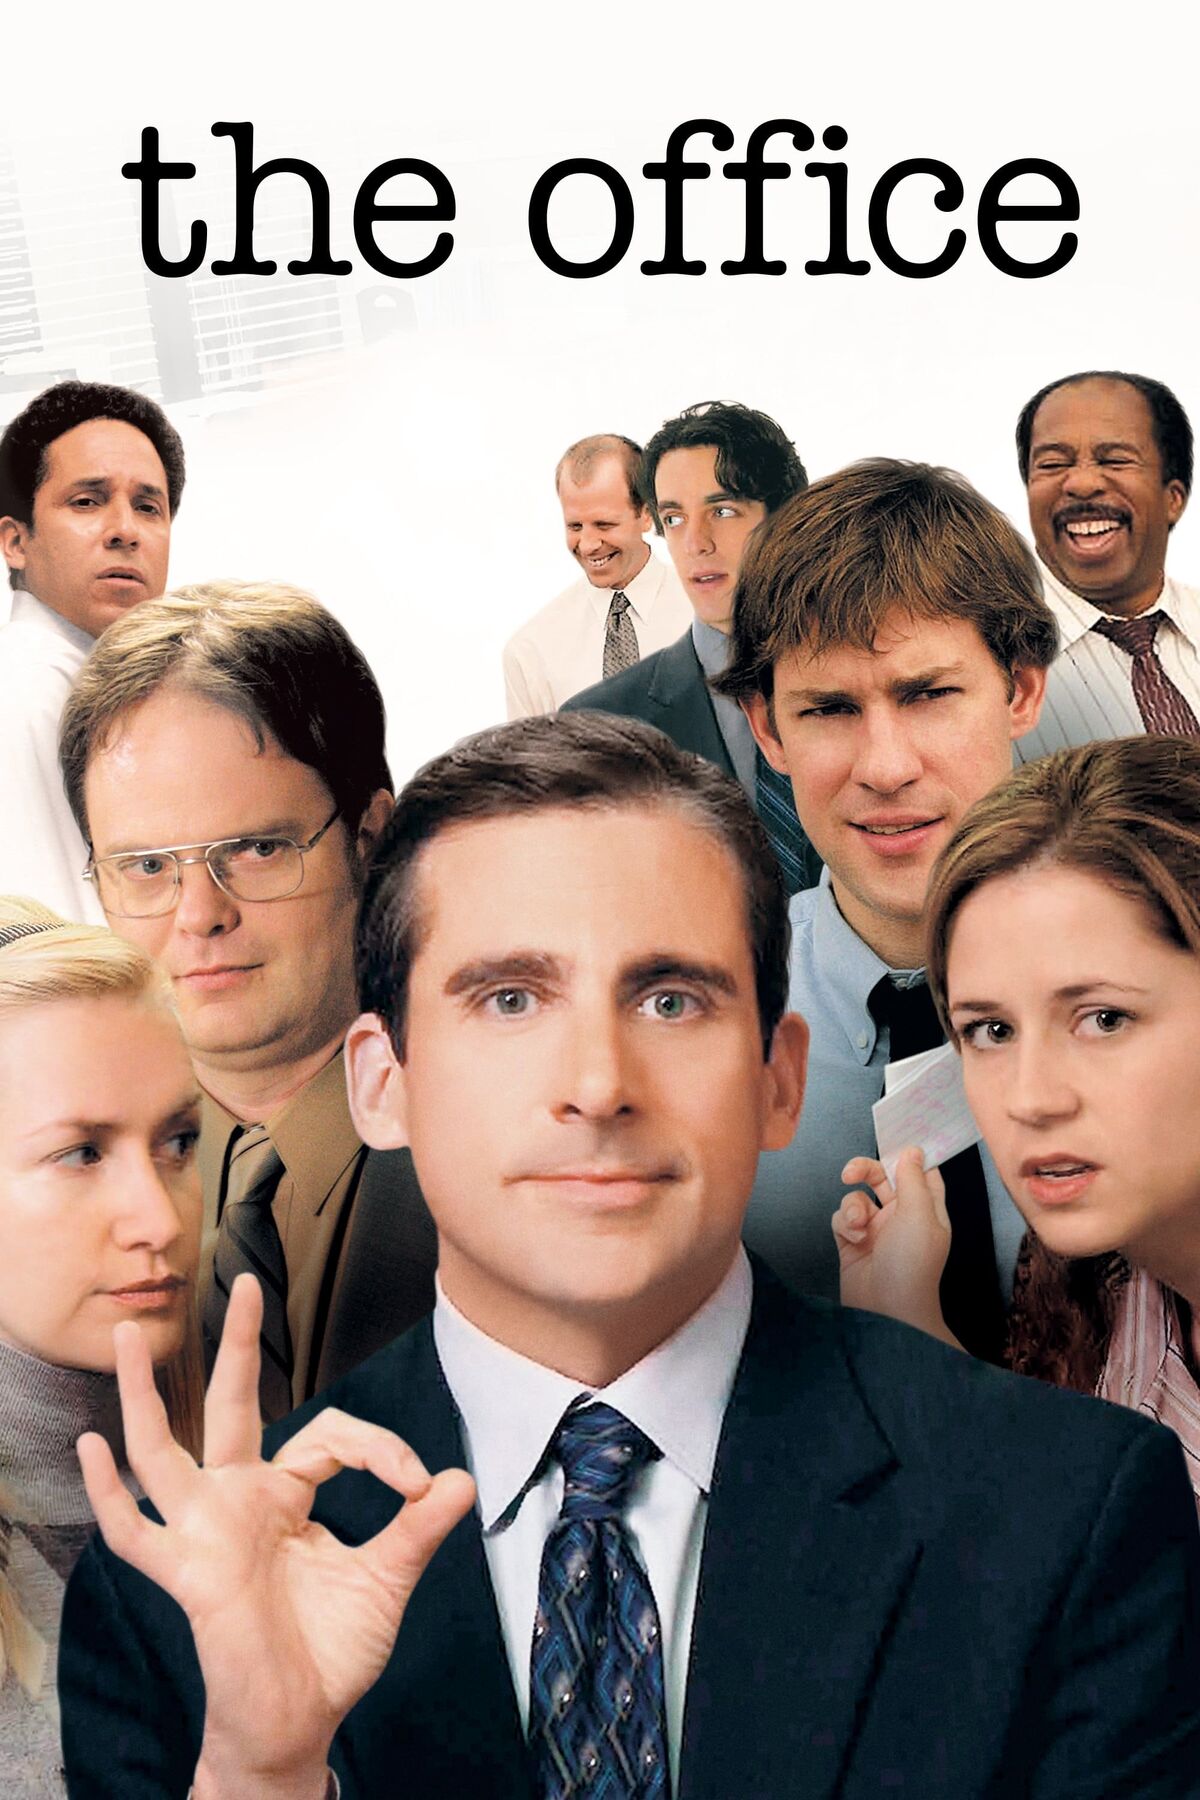 The Office (American season 1) - Wikipedia